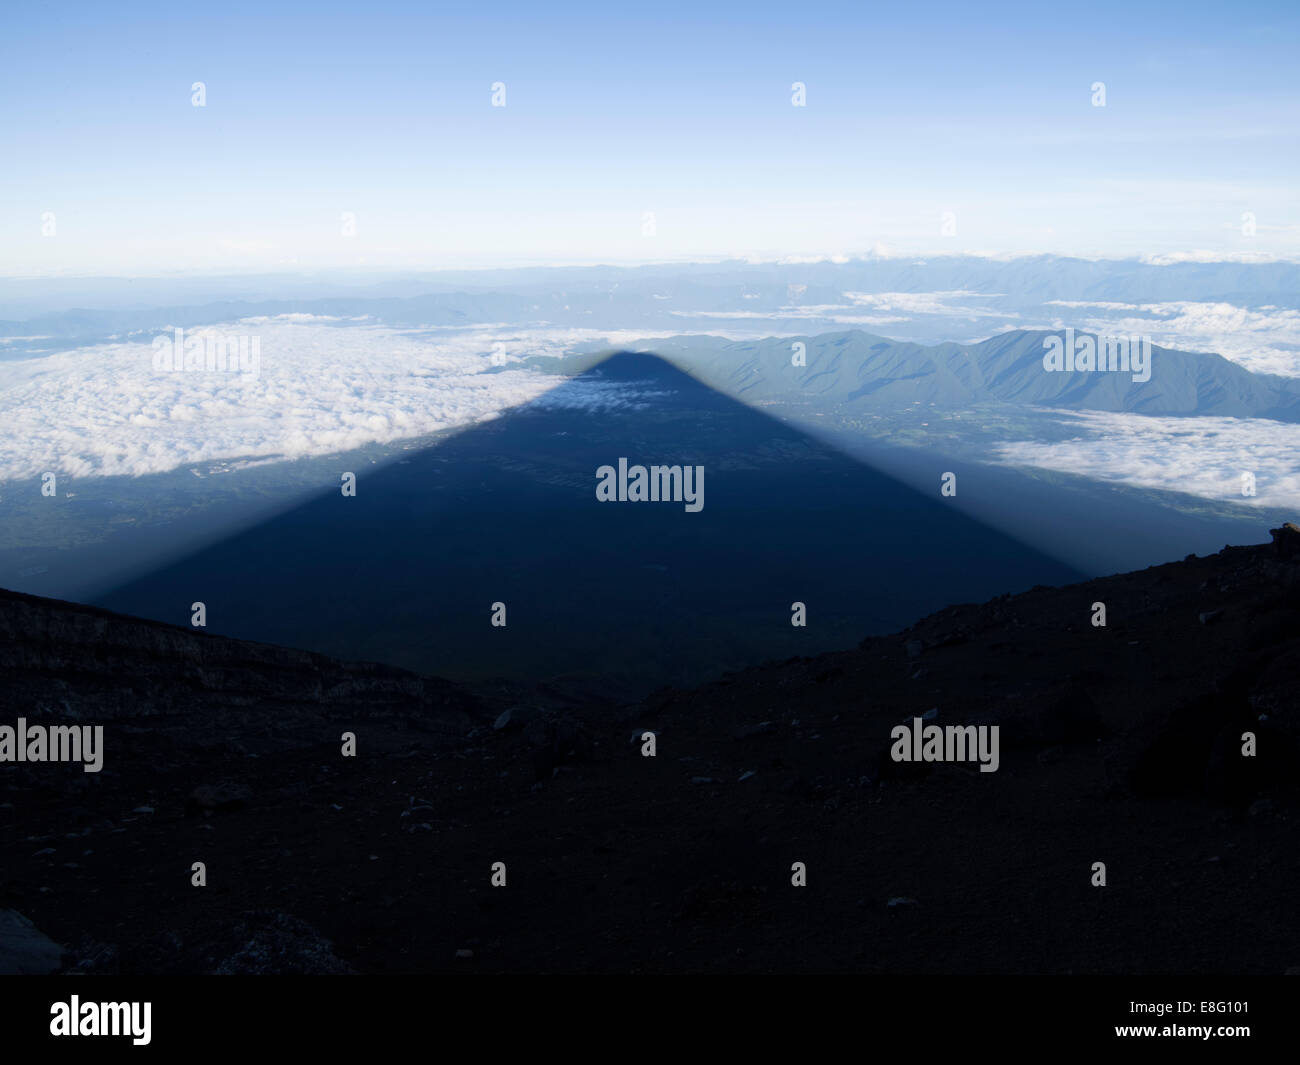 Climbing Mt. Fuji, JAPAN - View of Fuji's shadow from the summit of Mt Fuji at dawn. Stock Photo